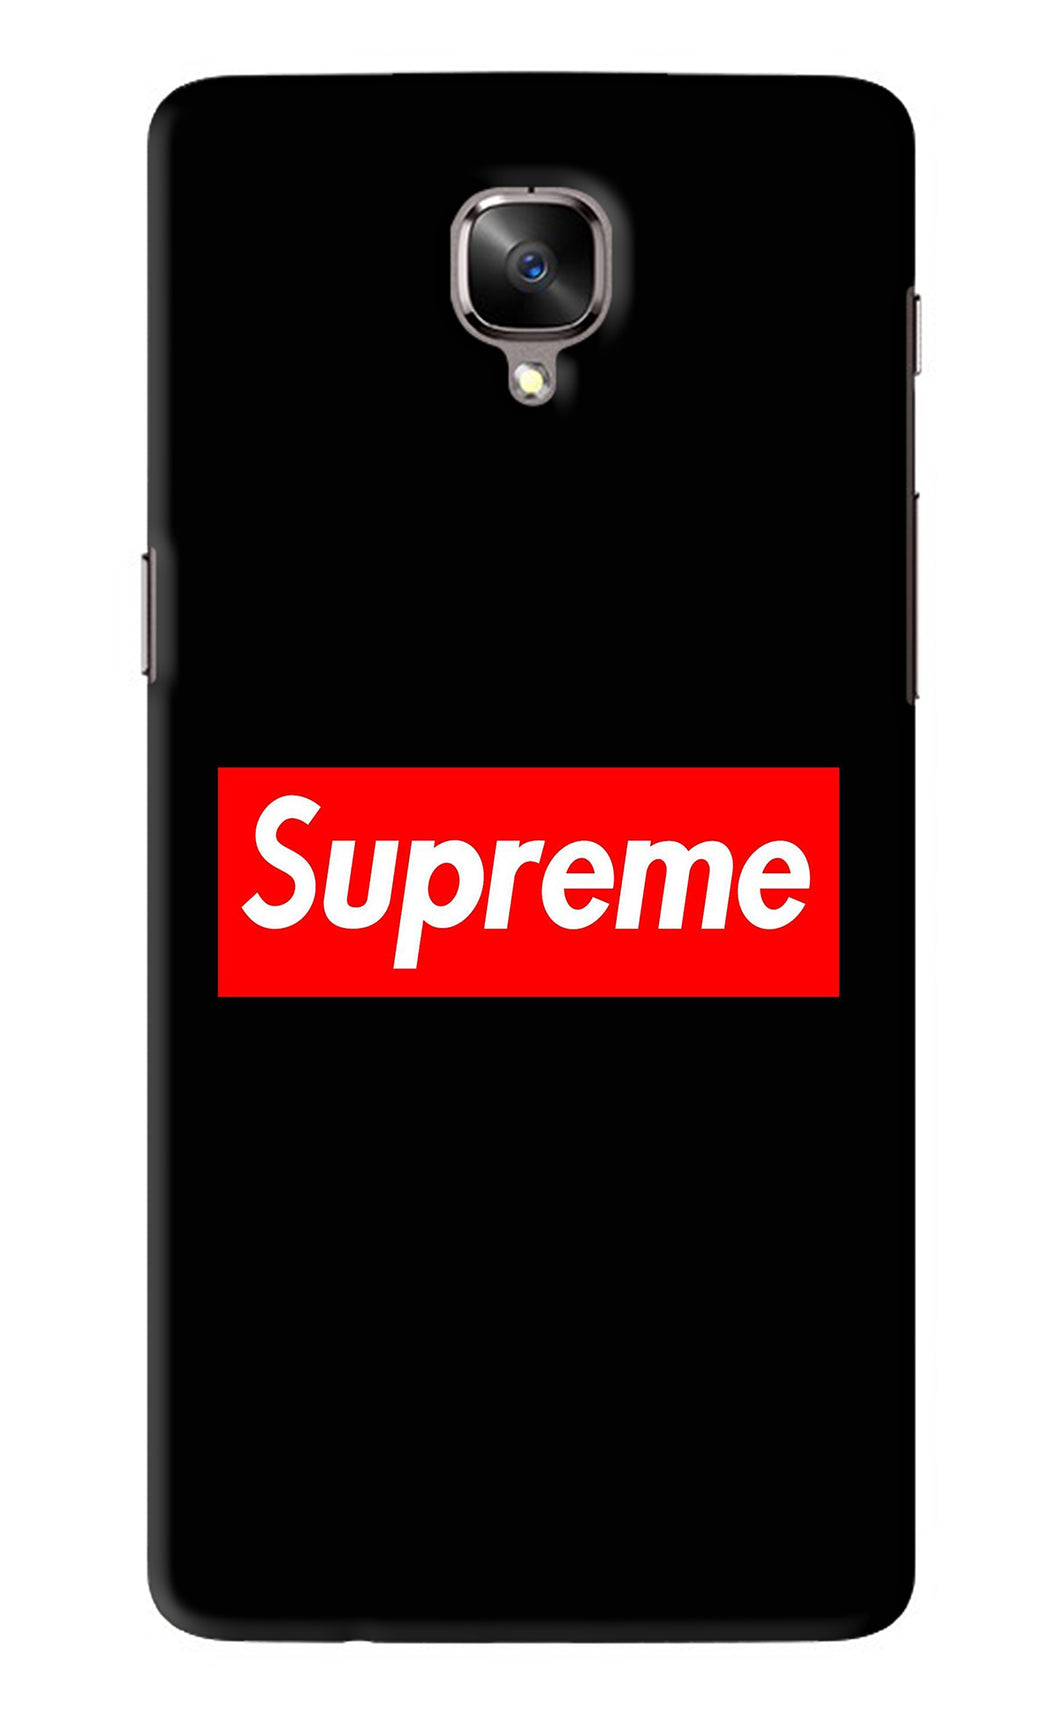 Supreme OnePlus 3 Back Skin Wrap